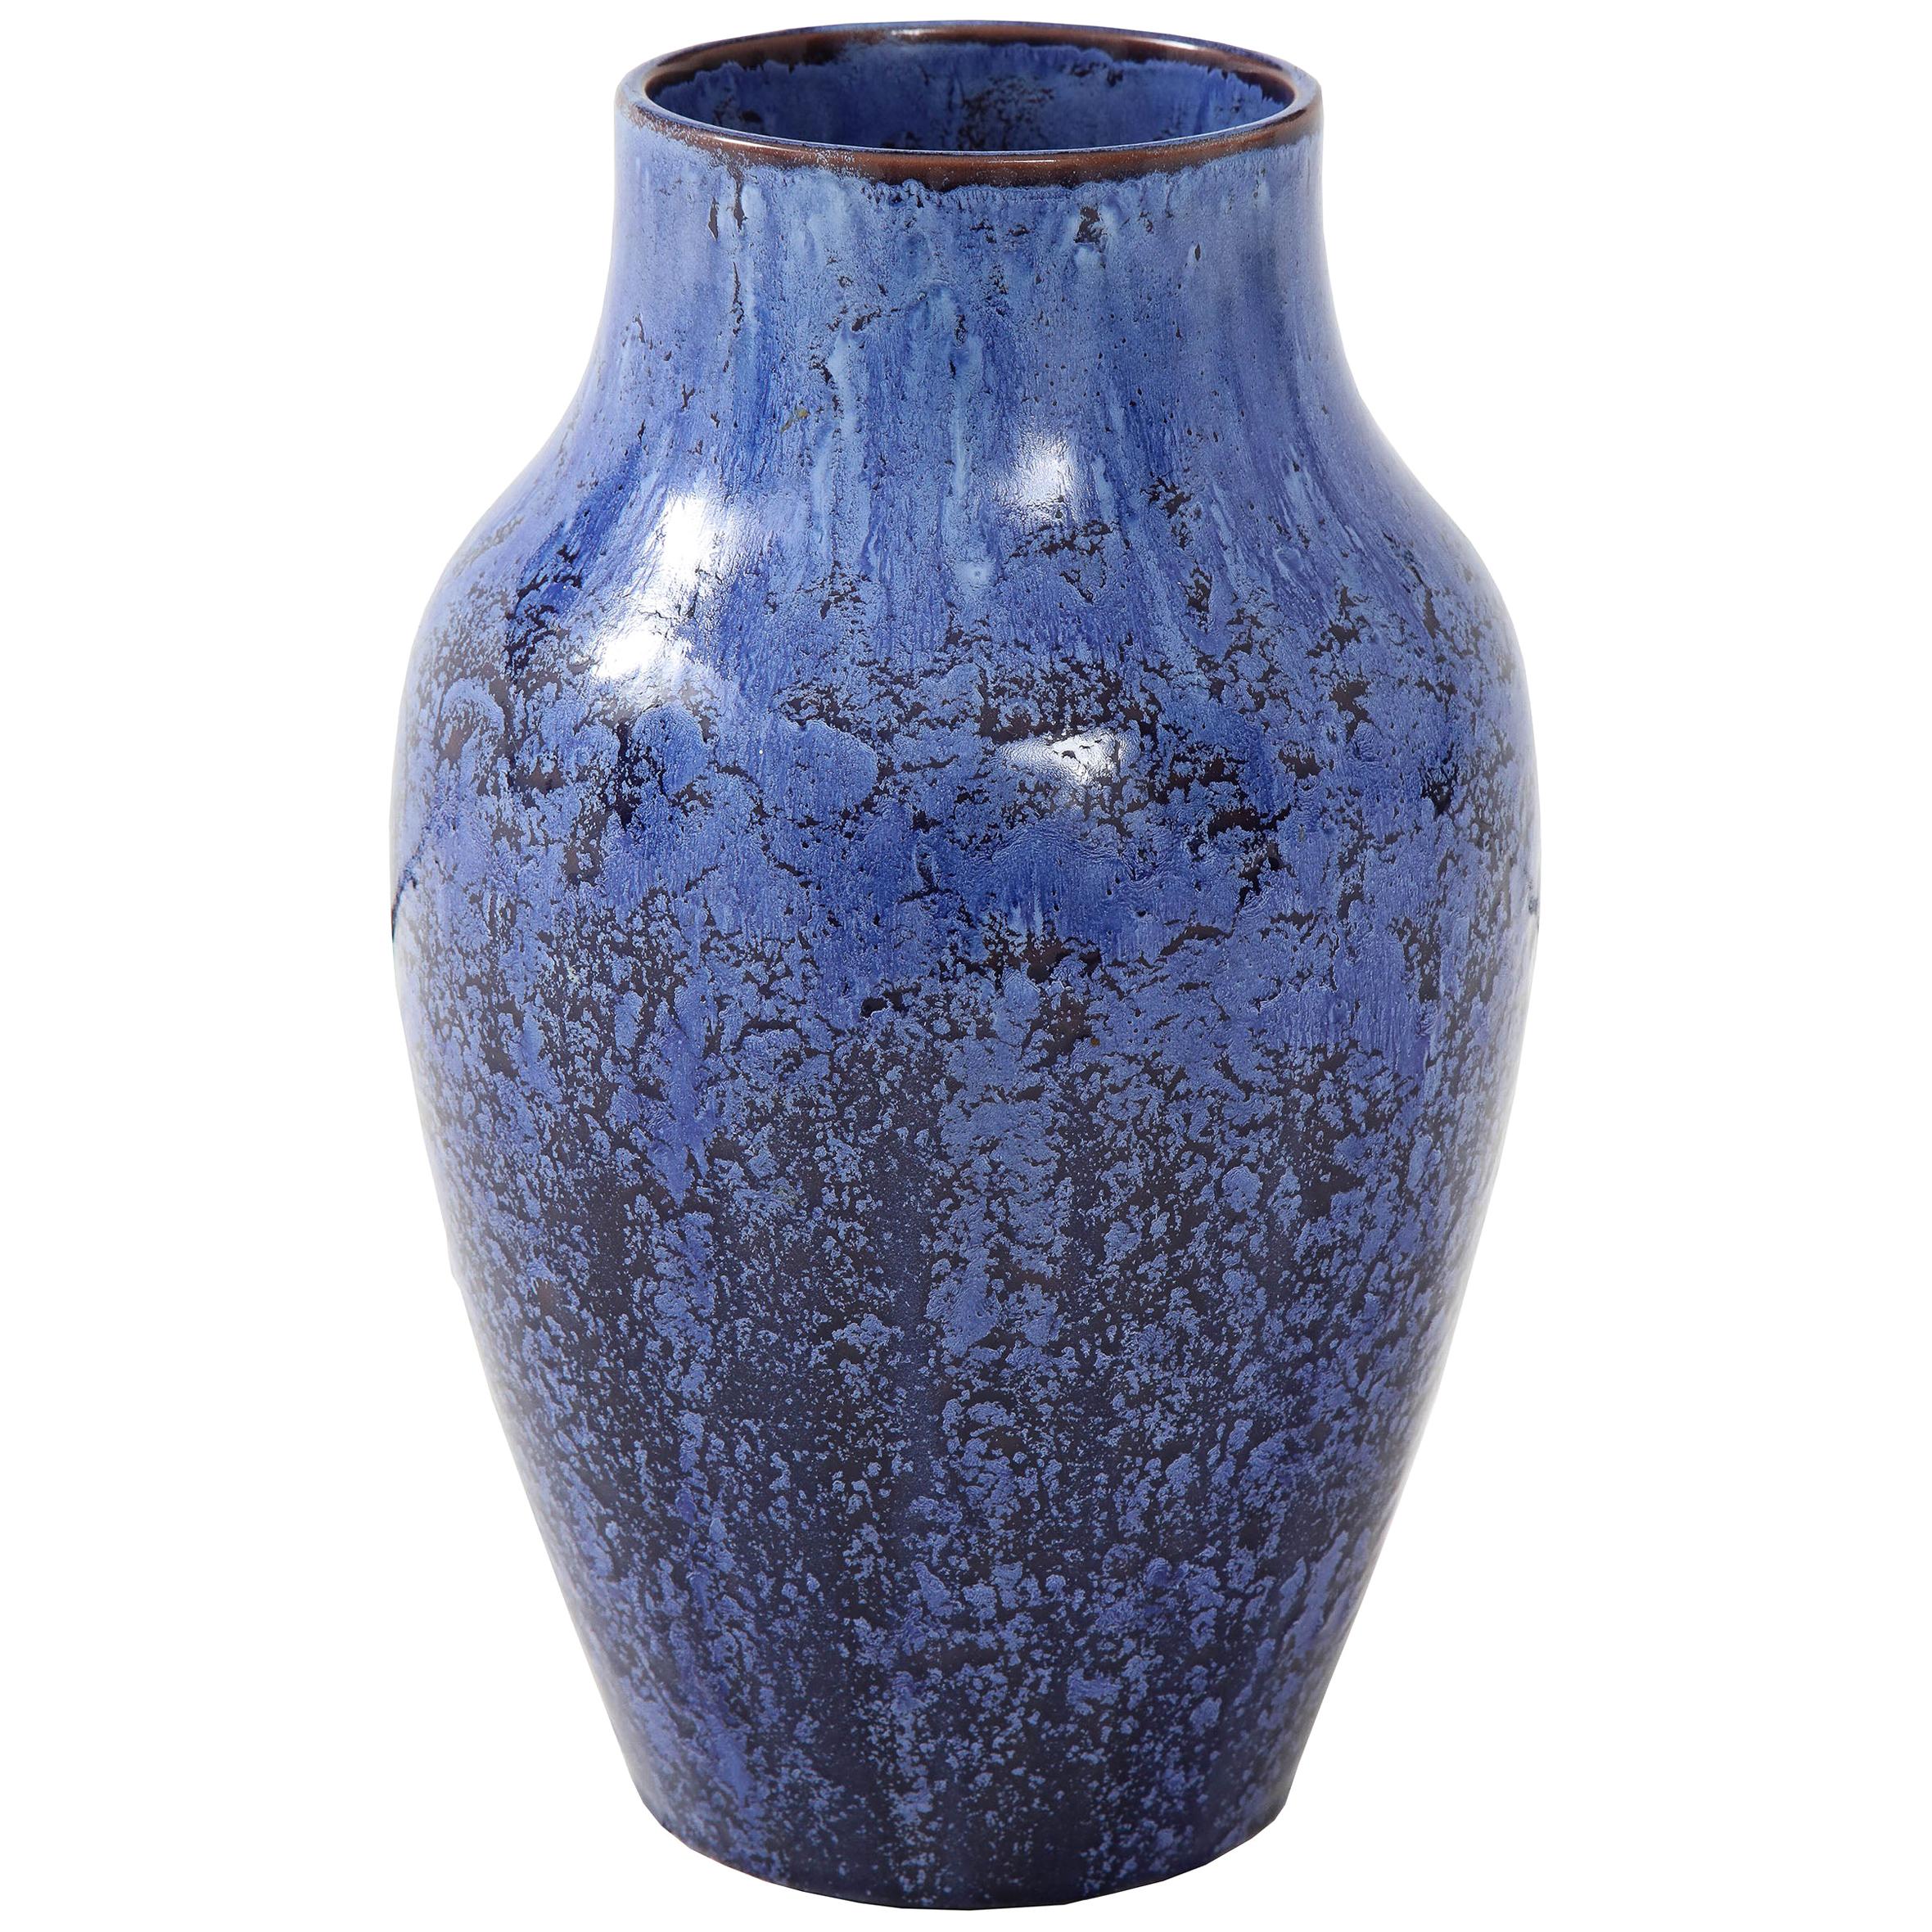 Aesthetic Movement Ceramic Vase by Pilkington For Sale